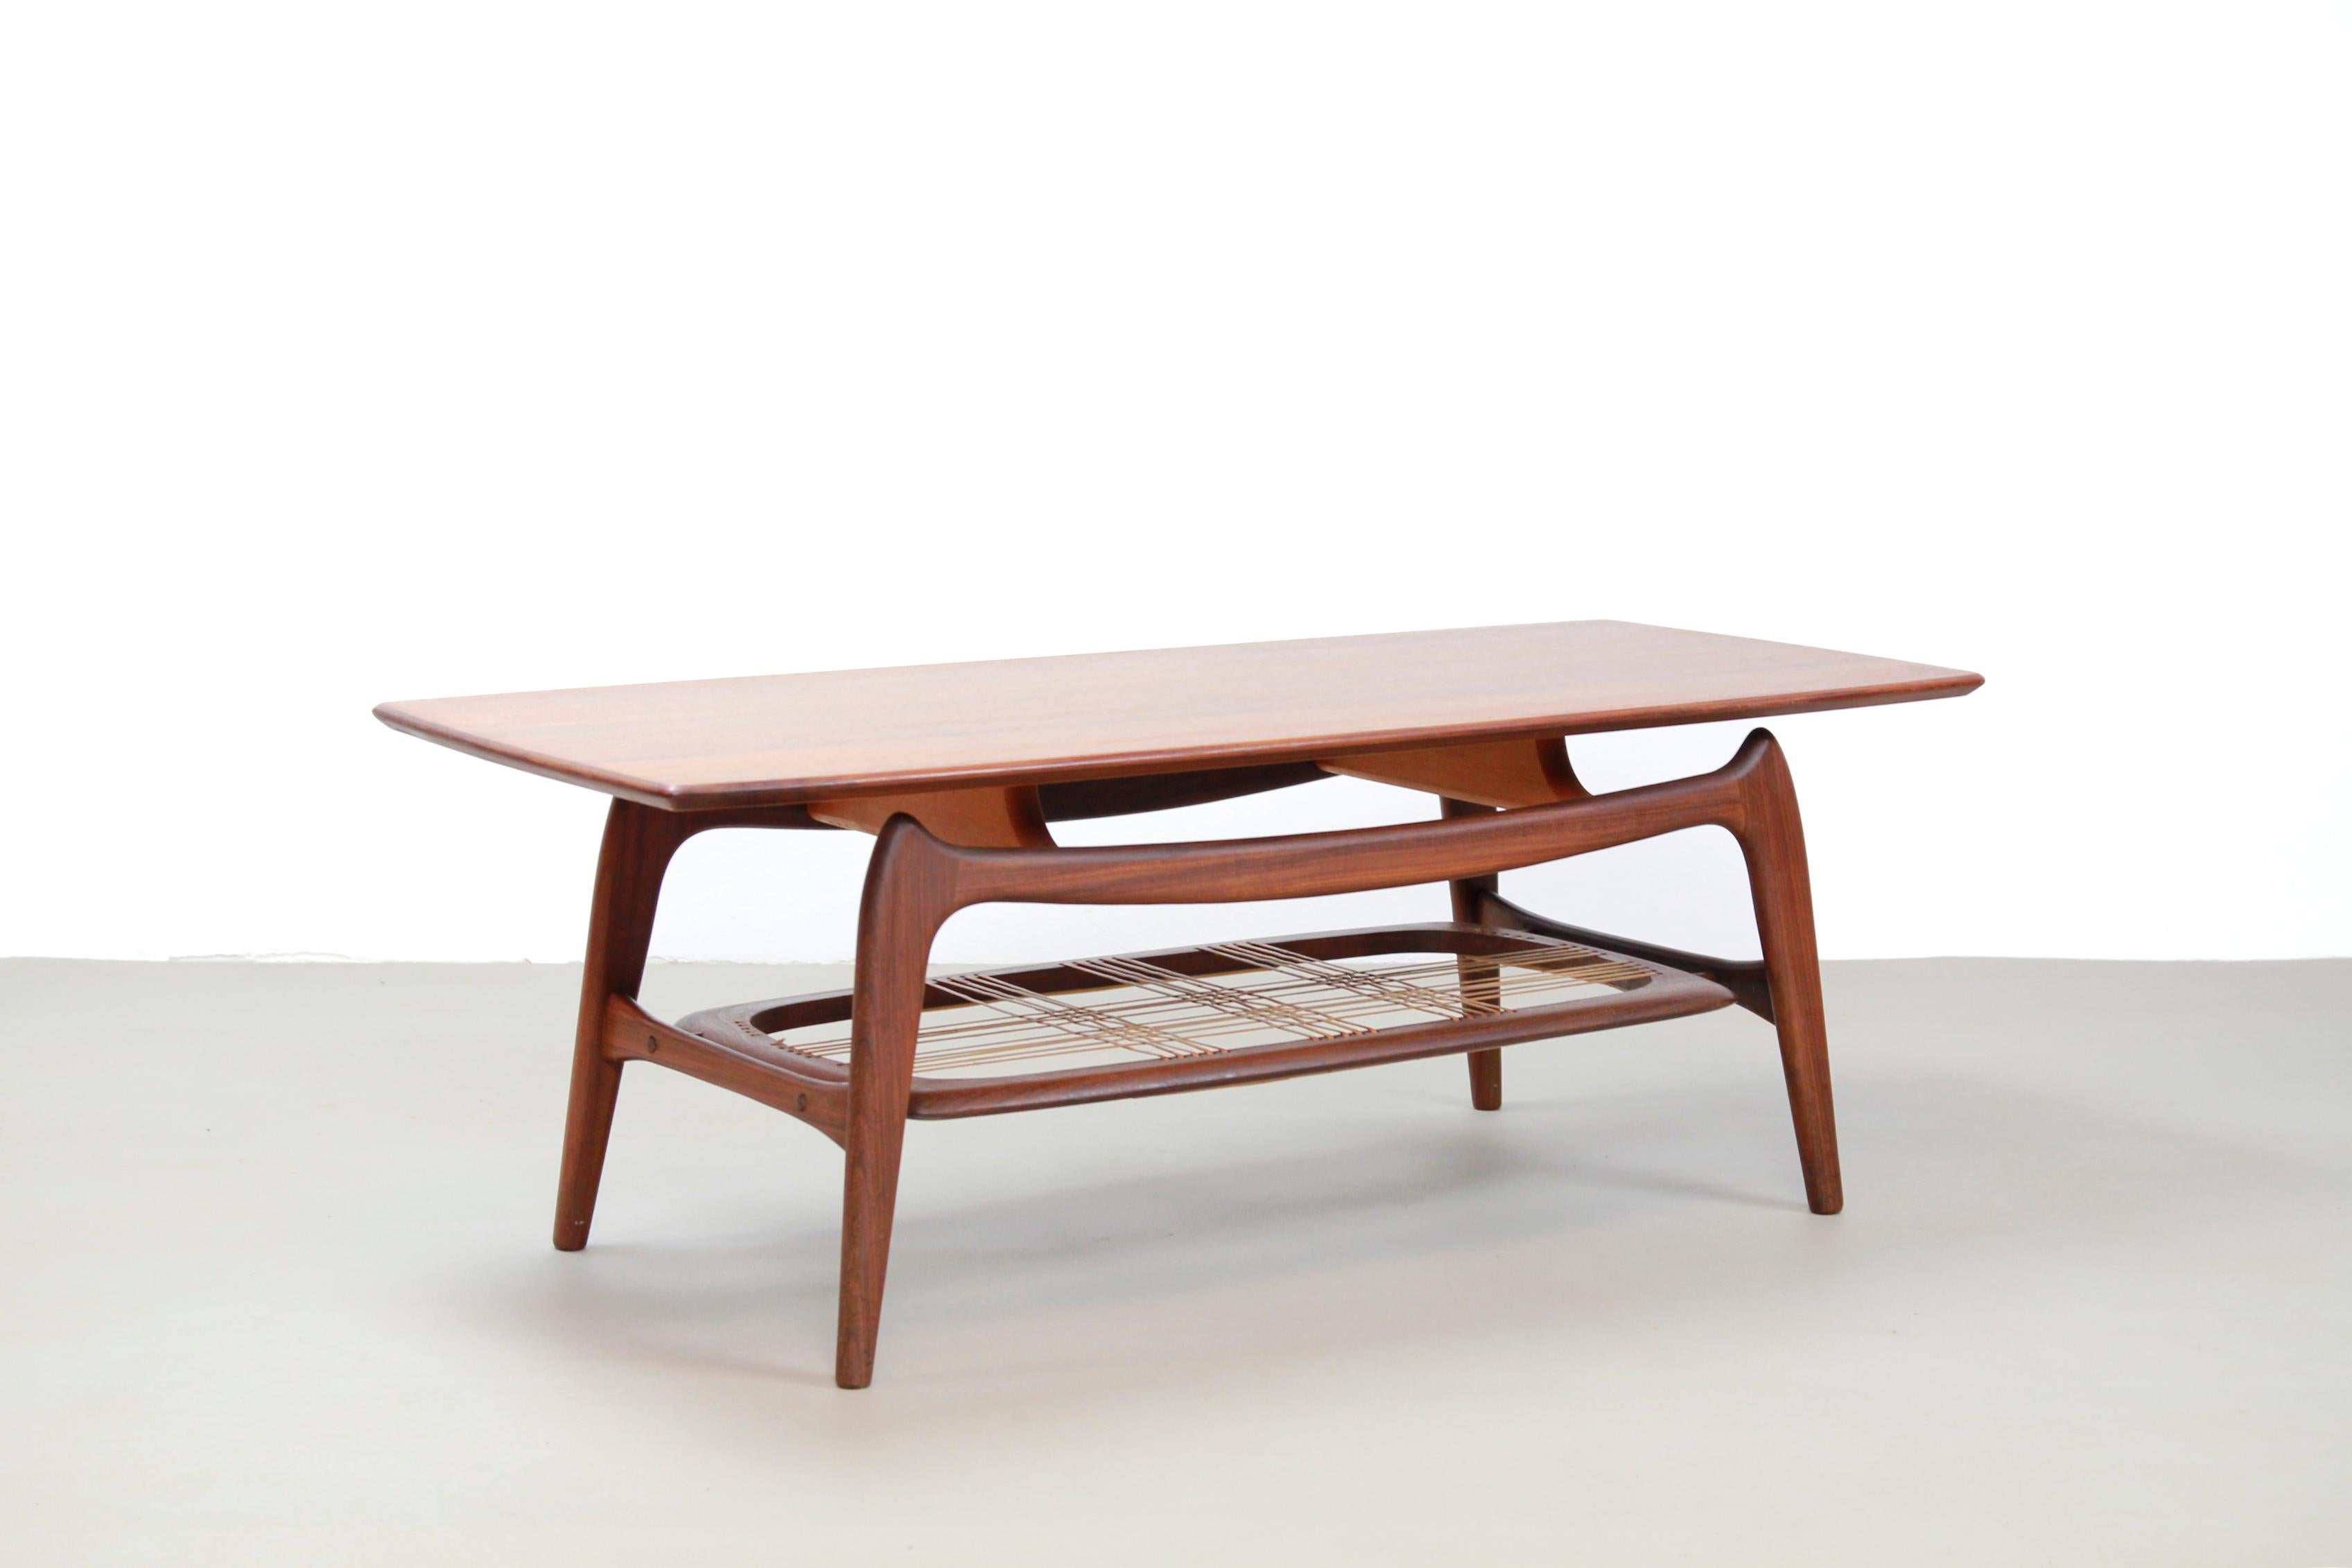 Danish Teak Dutch design coffee table by Louis van Teeffelen for WeBe